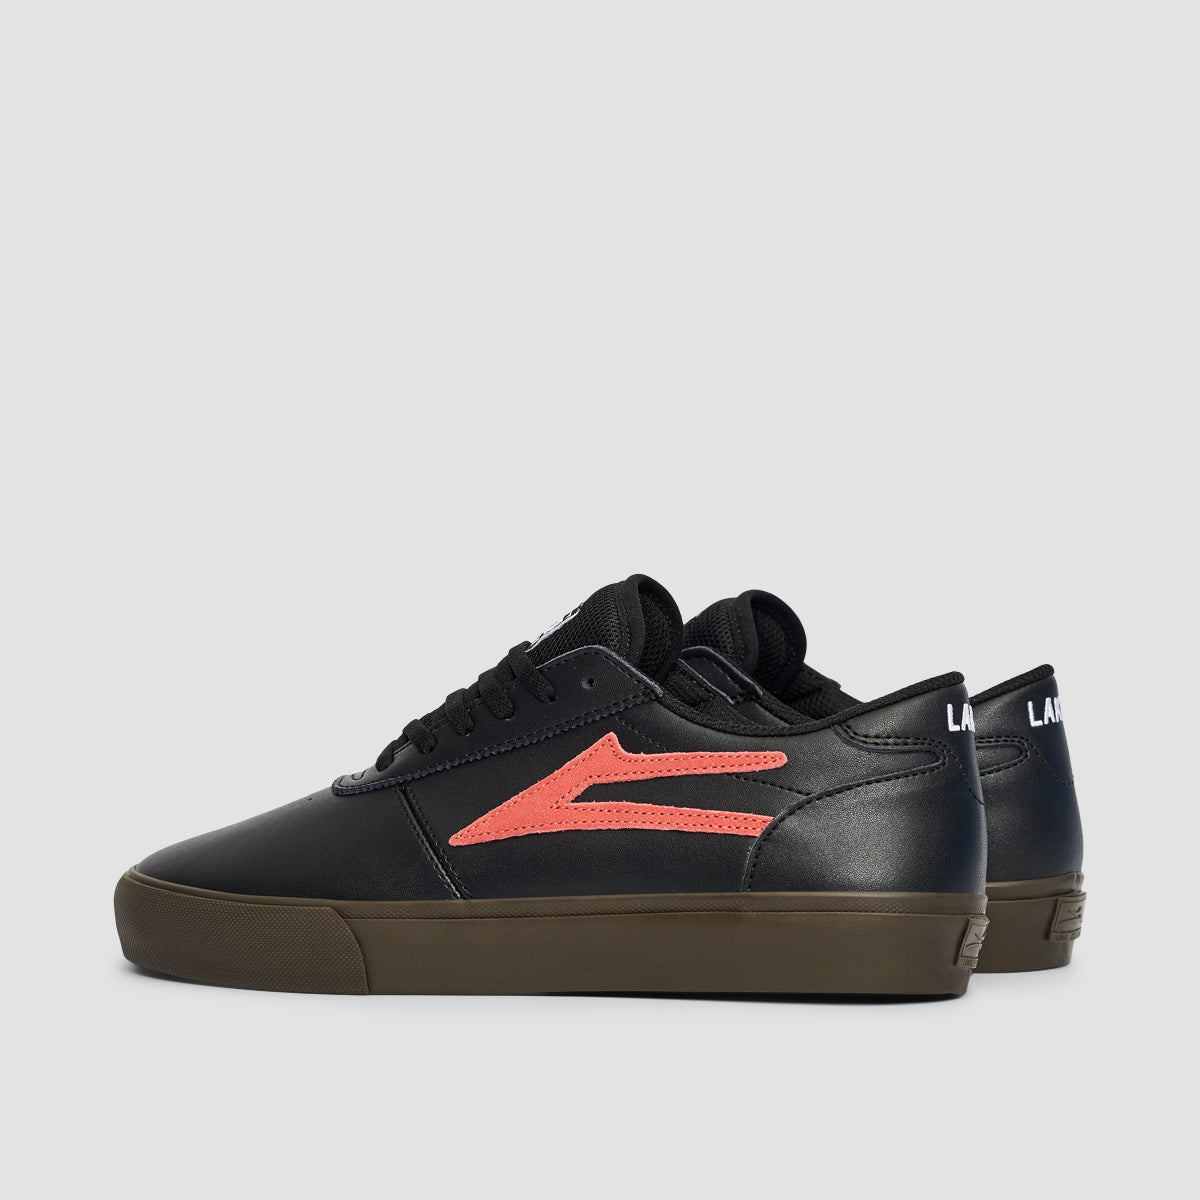 Lakai Manchester Shoes - Black/Dark Gum Leather